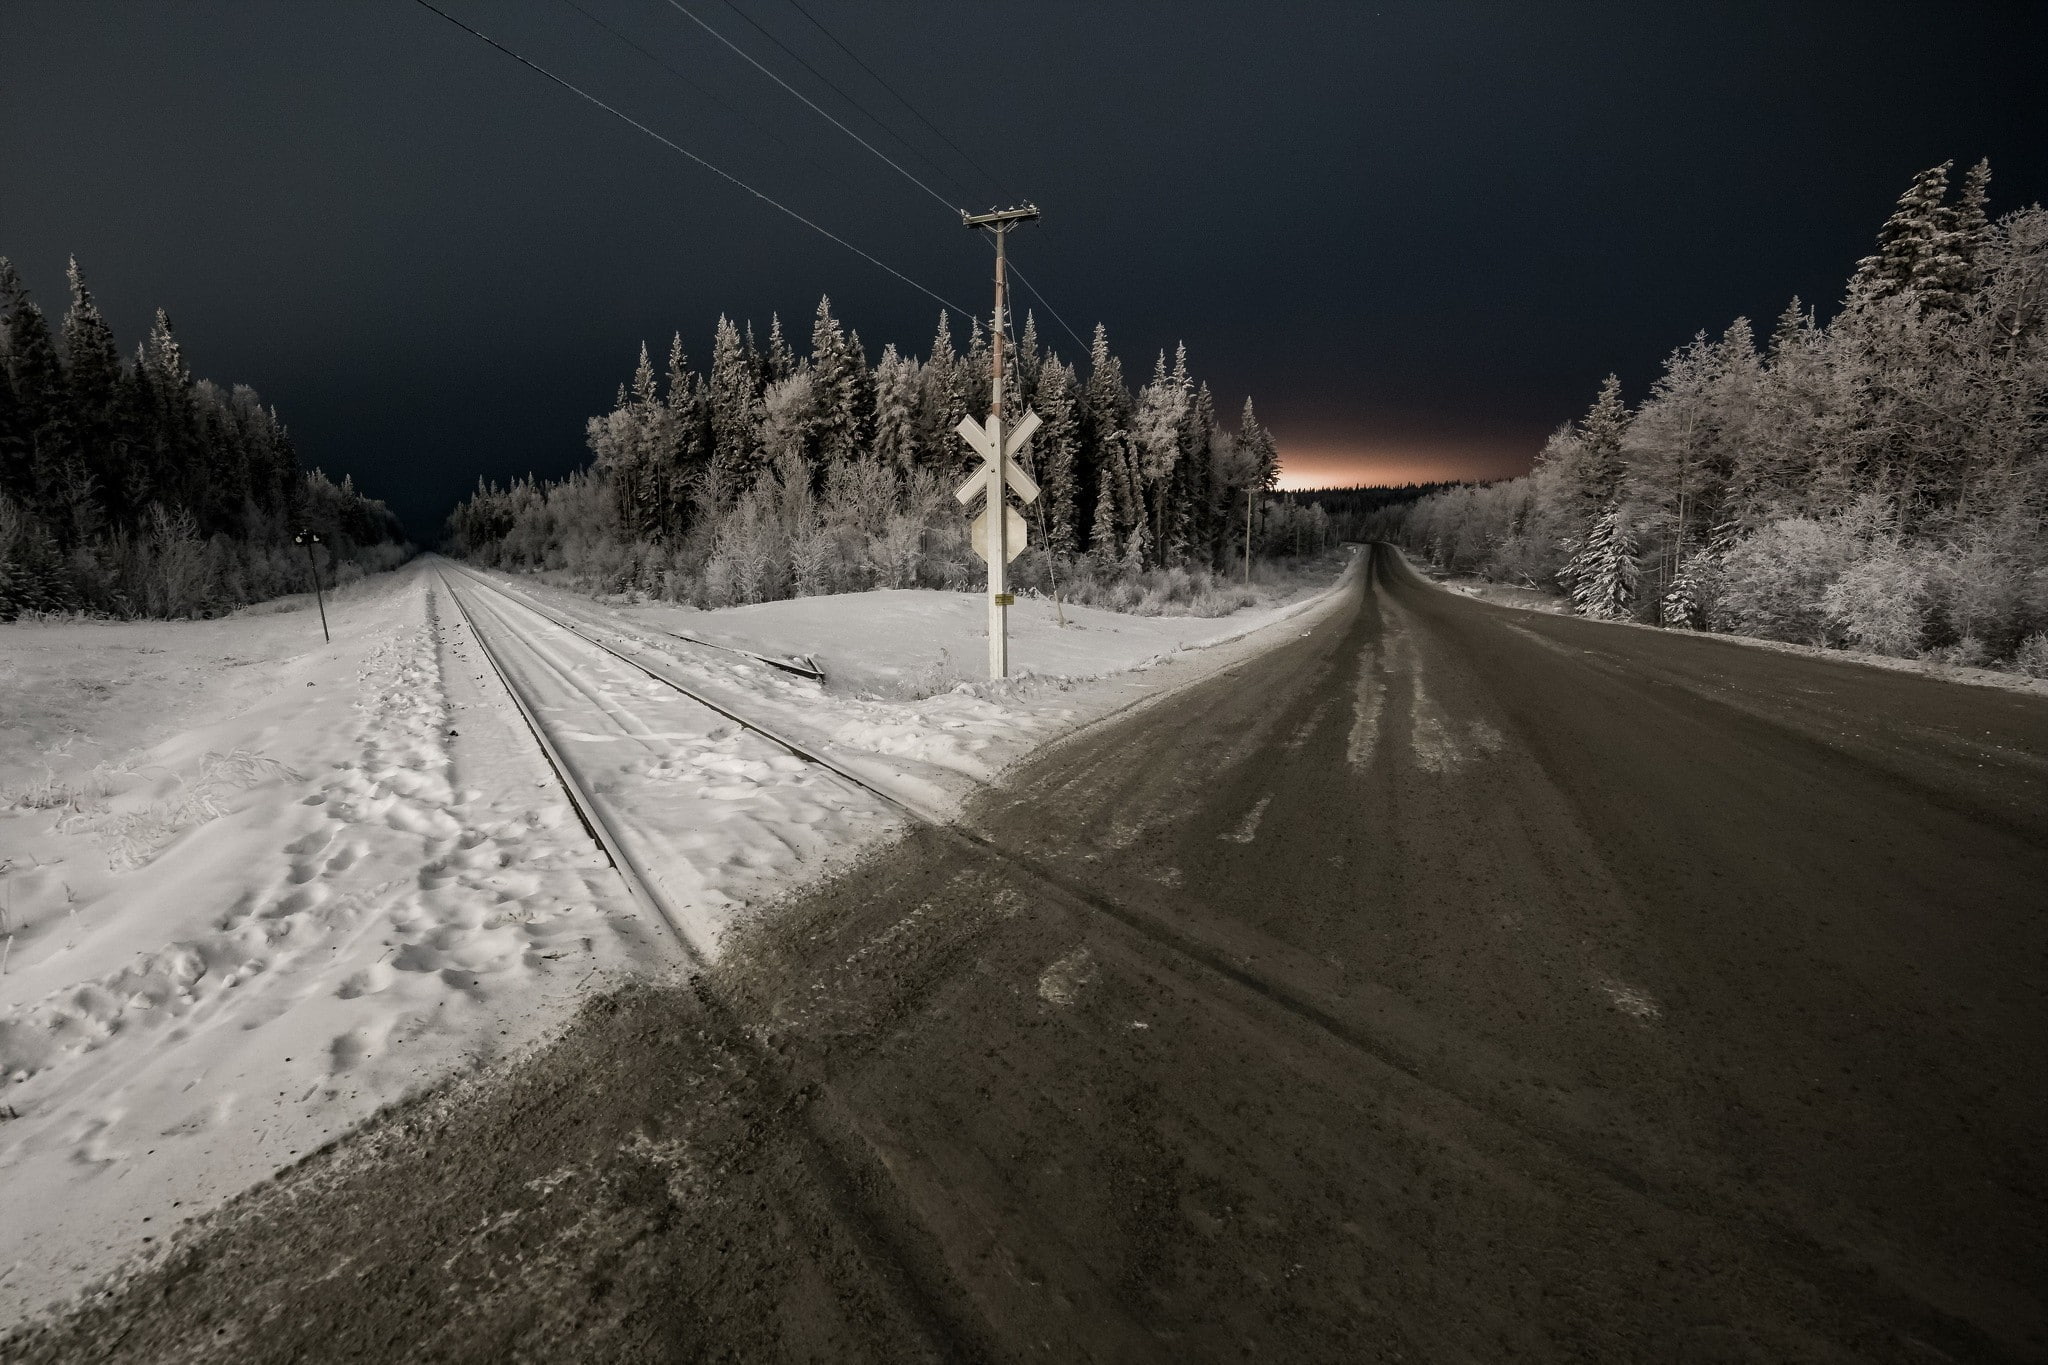 railway crossing night landscape road snow trees